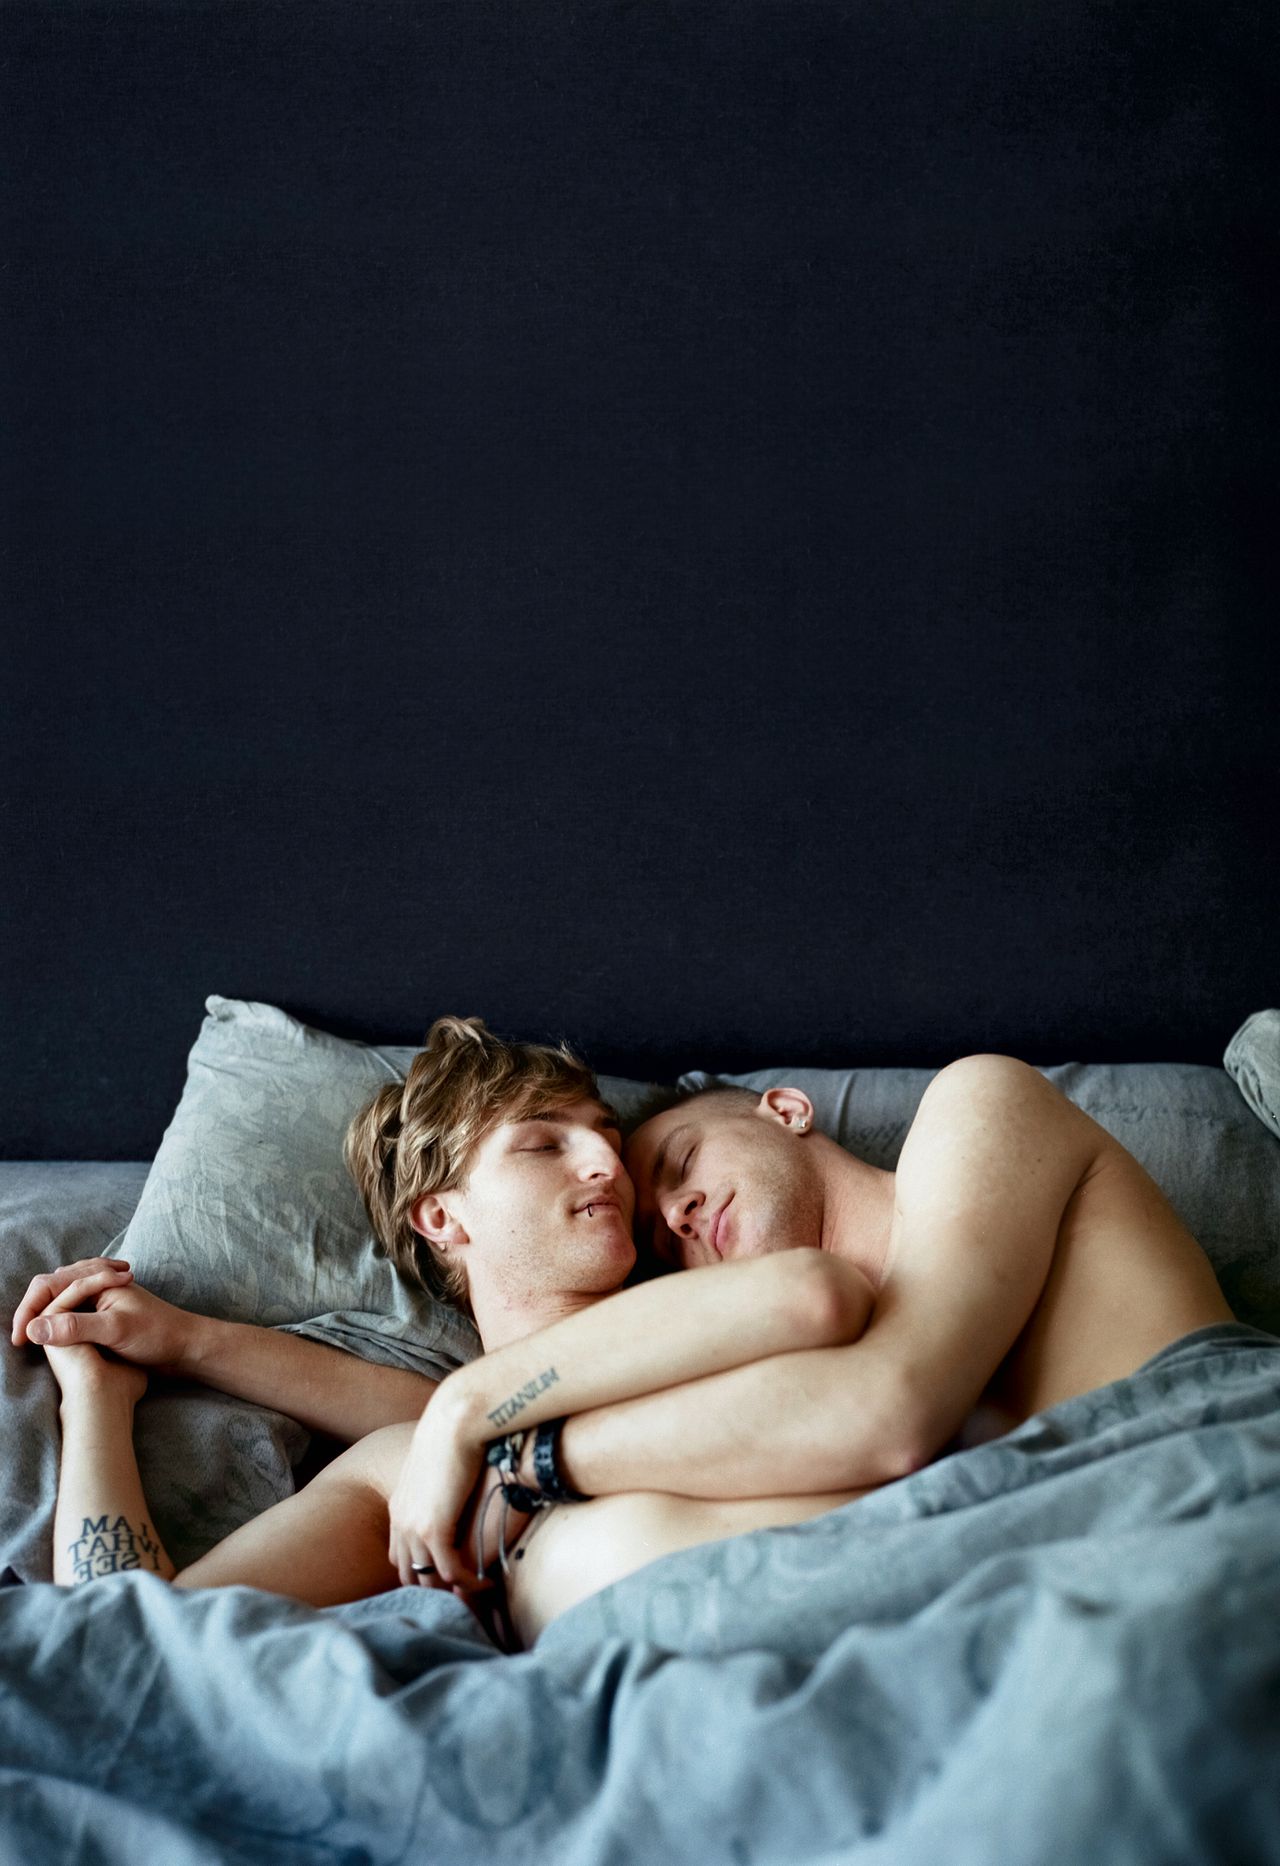 Uit de fotoserie ‘Love is lost’: Patrick & Wouter